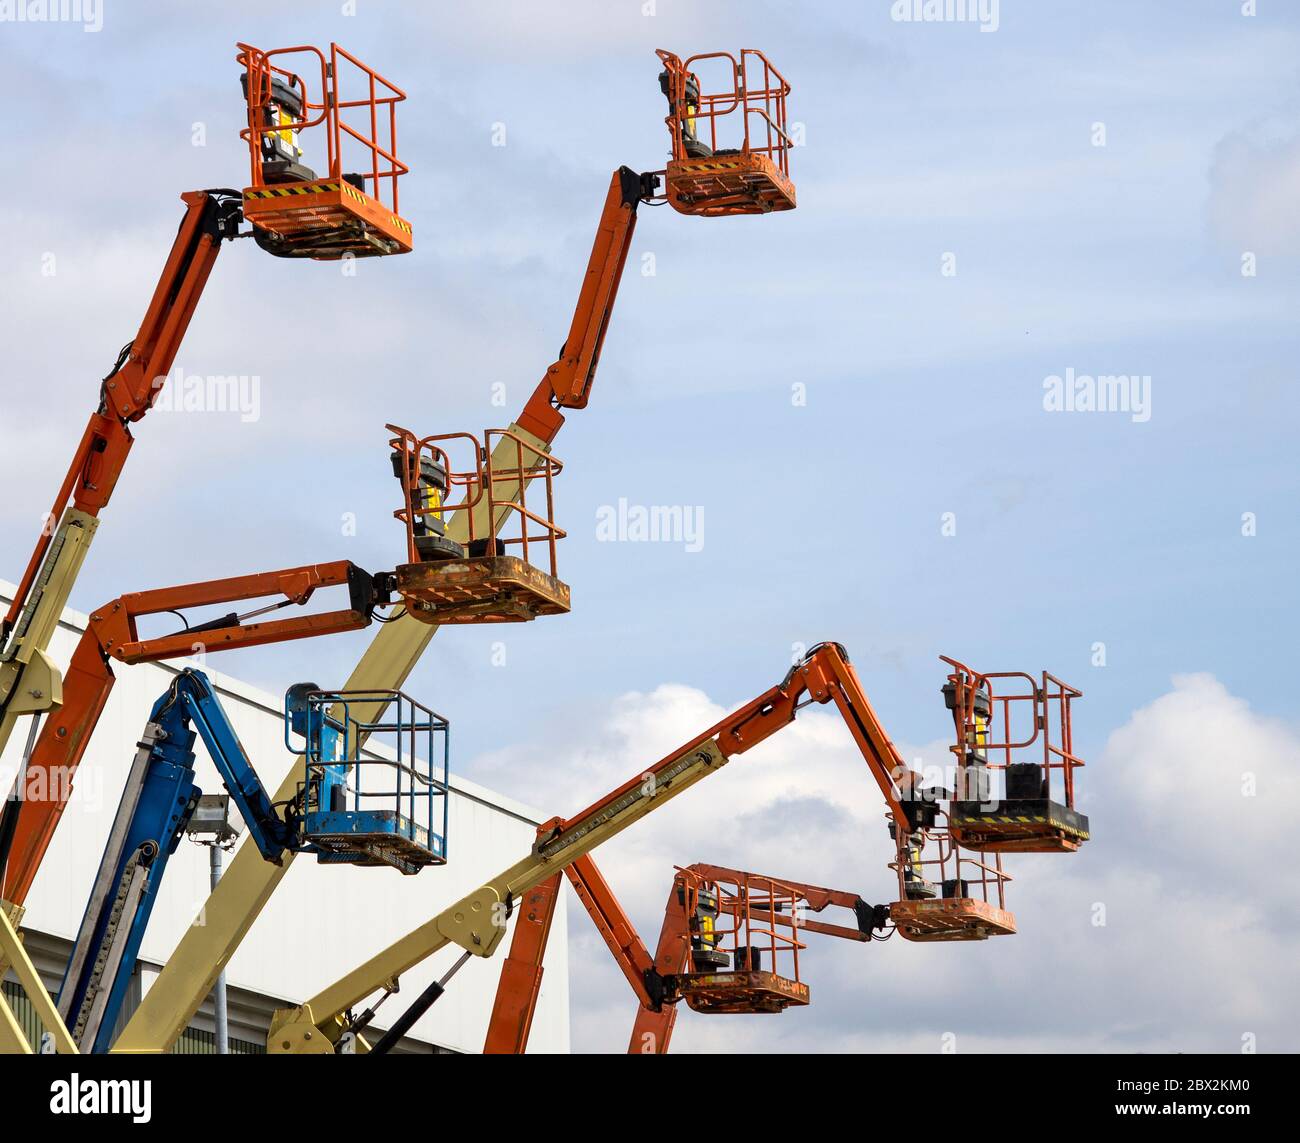 Mobile elevating work platforms Stock Photo